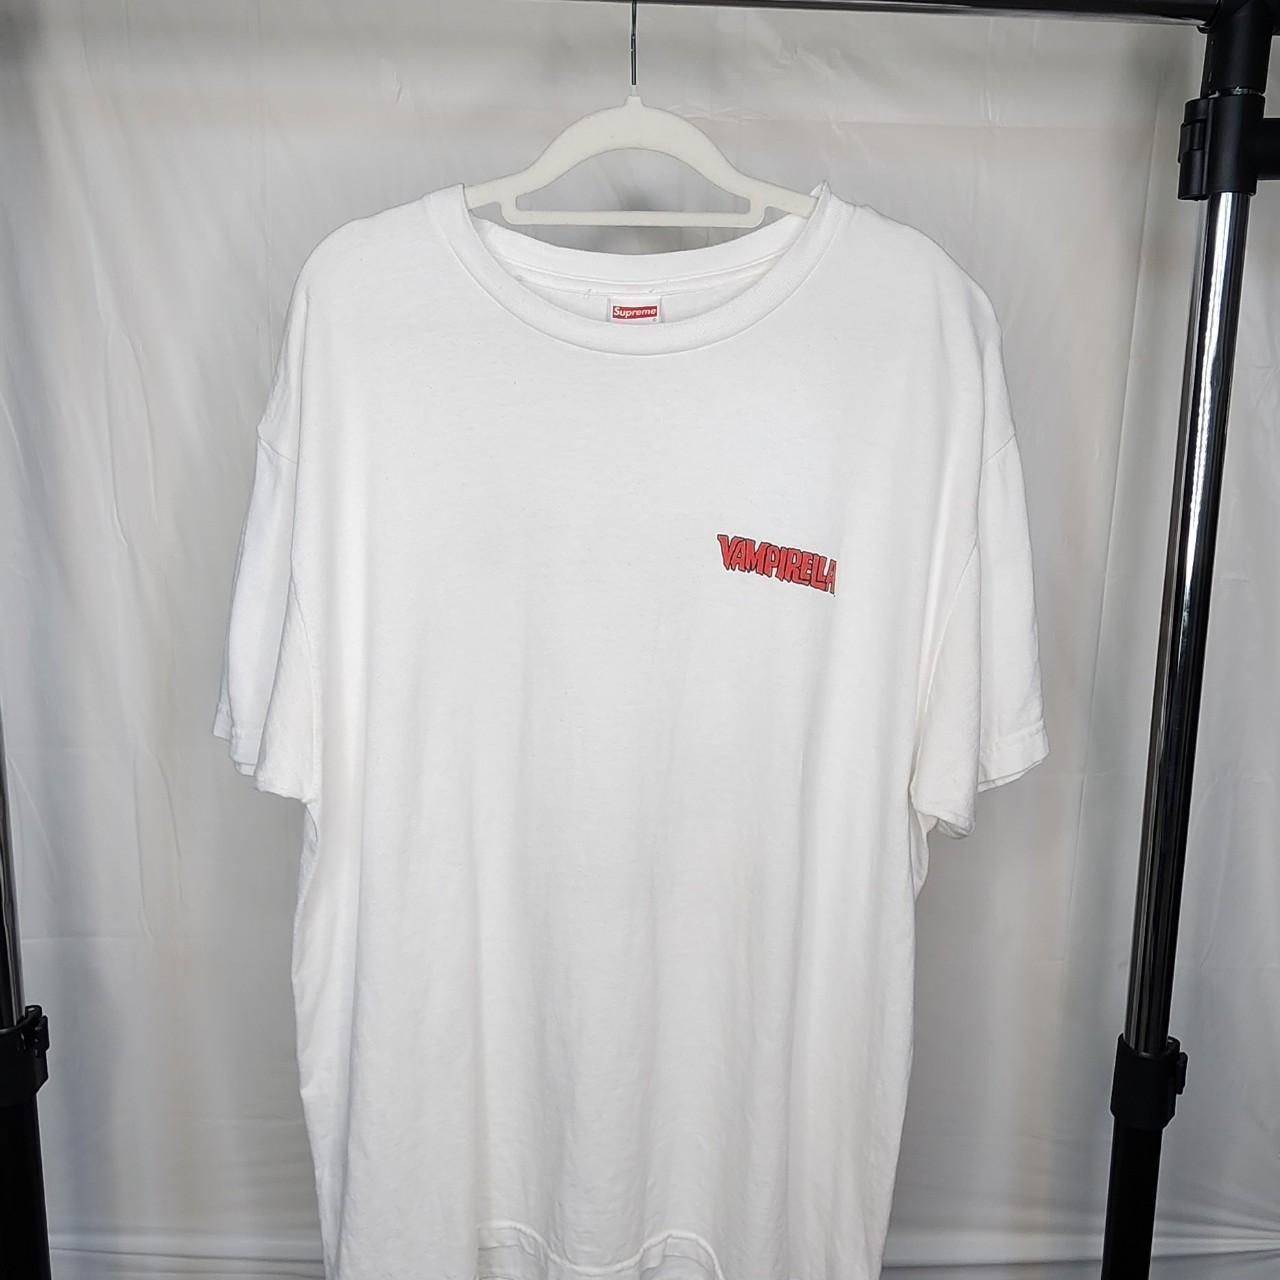 Supreme Cards T-shirt - White